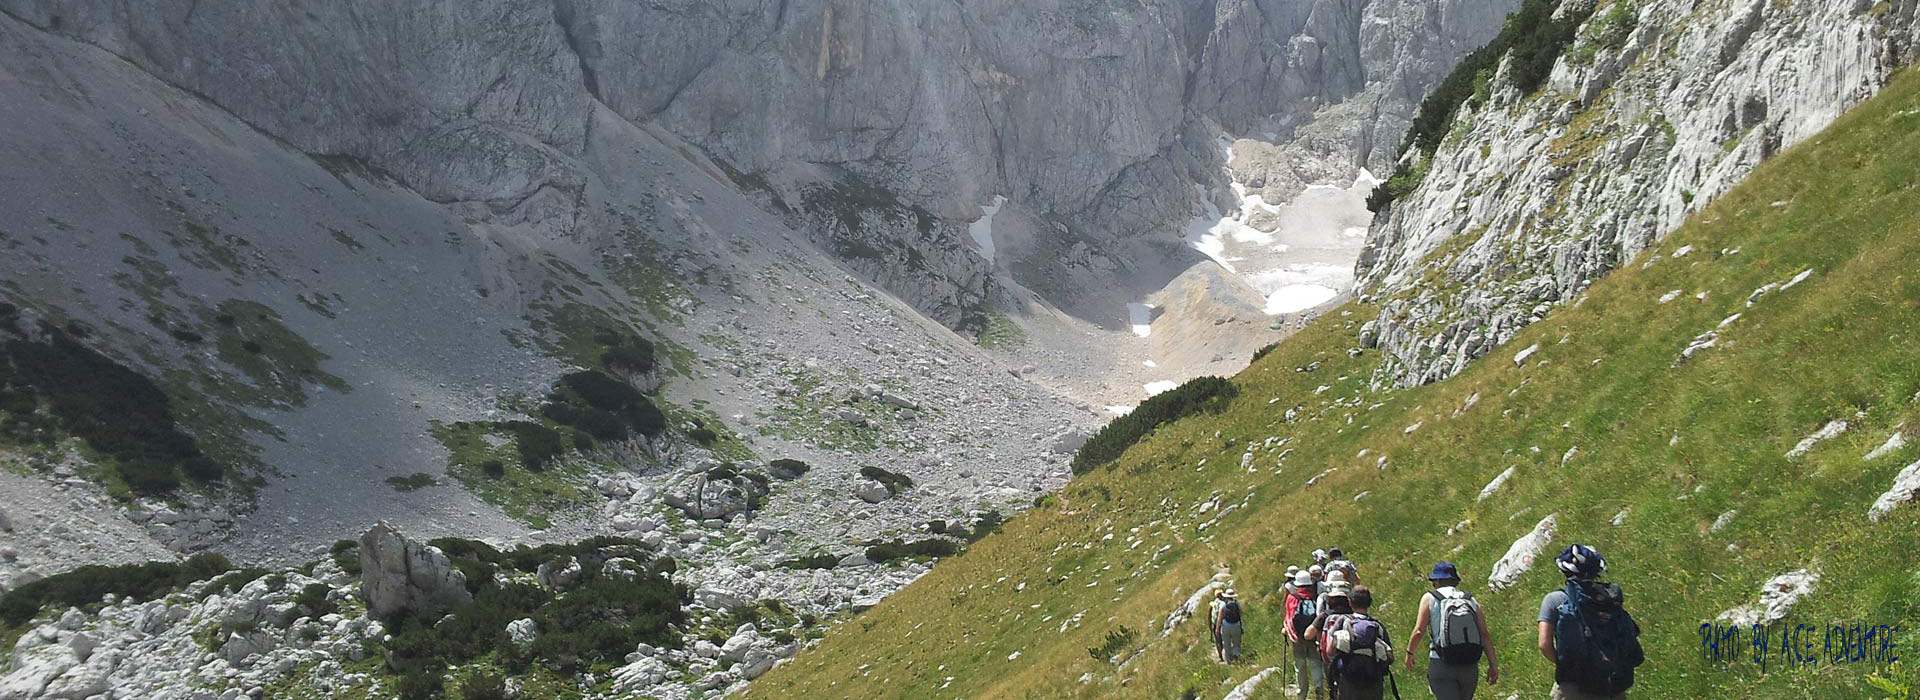 Montenegro walking self-guided holiday - Durmitor hiking